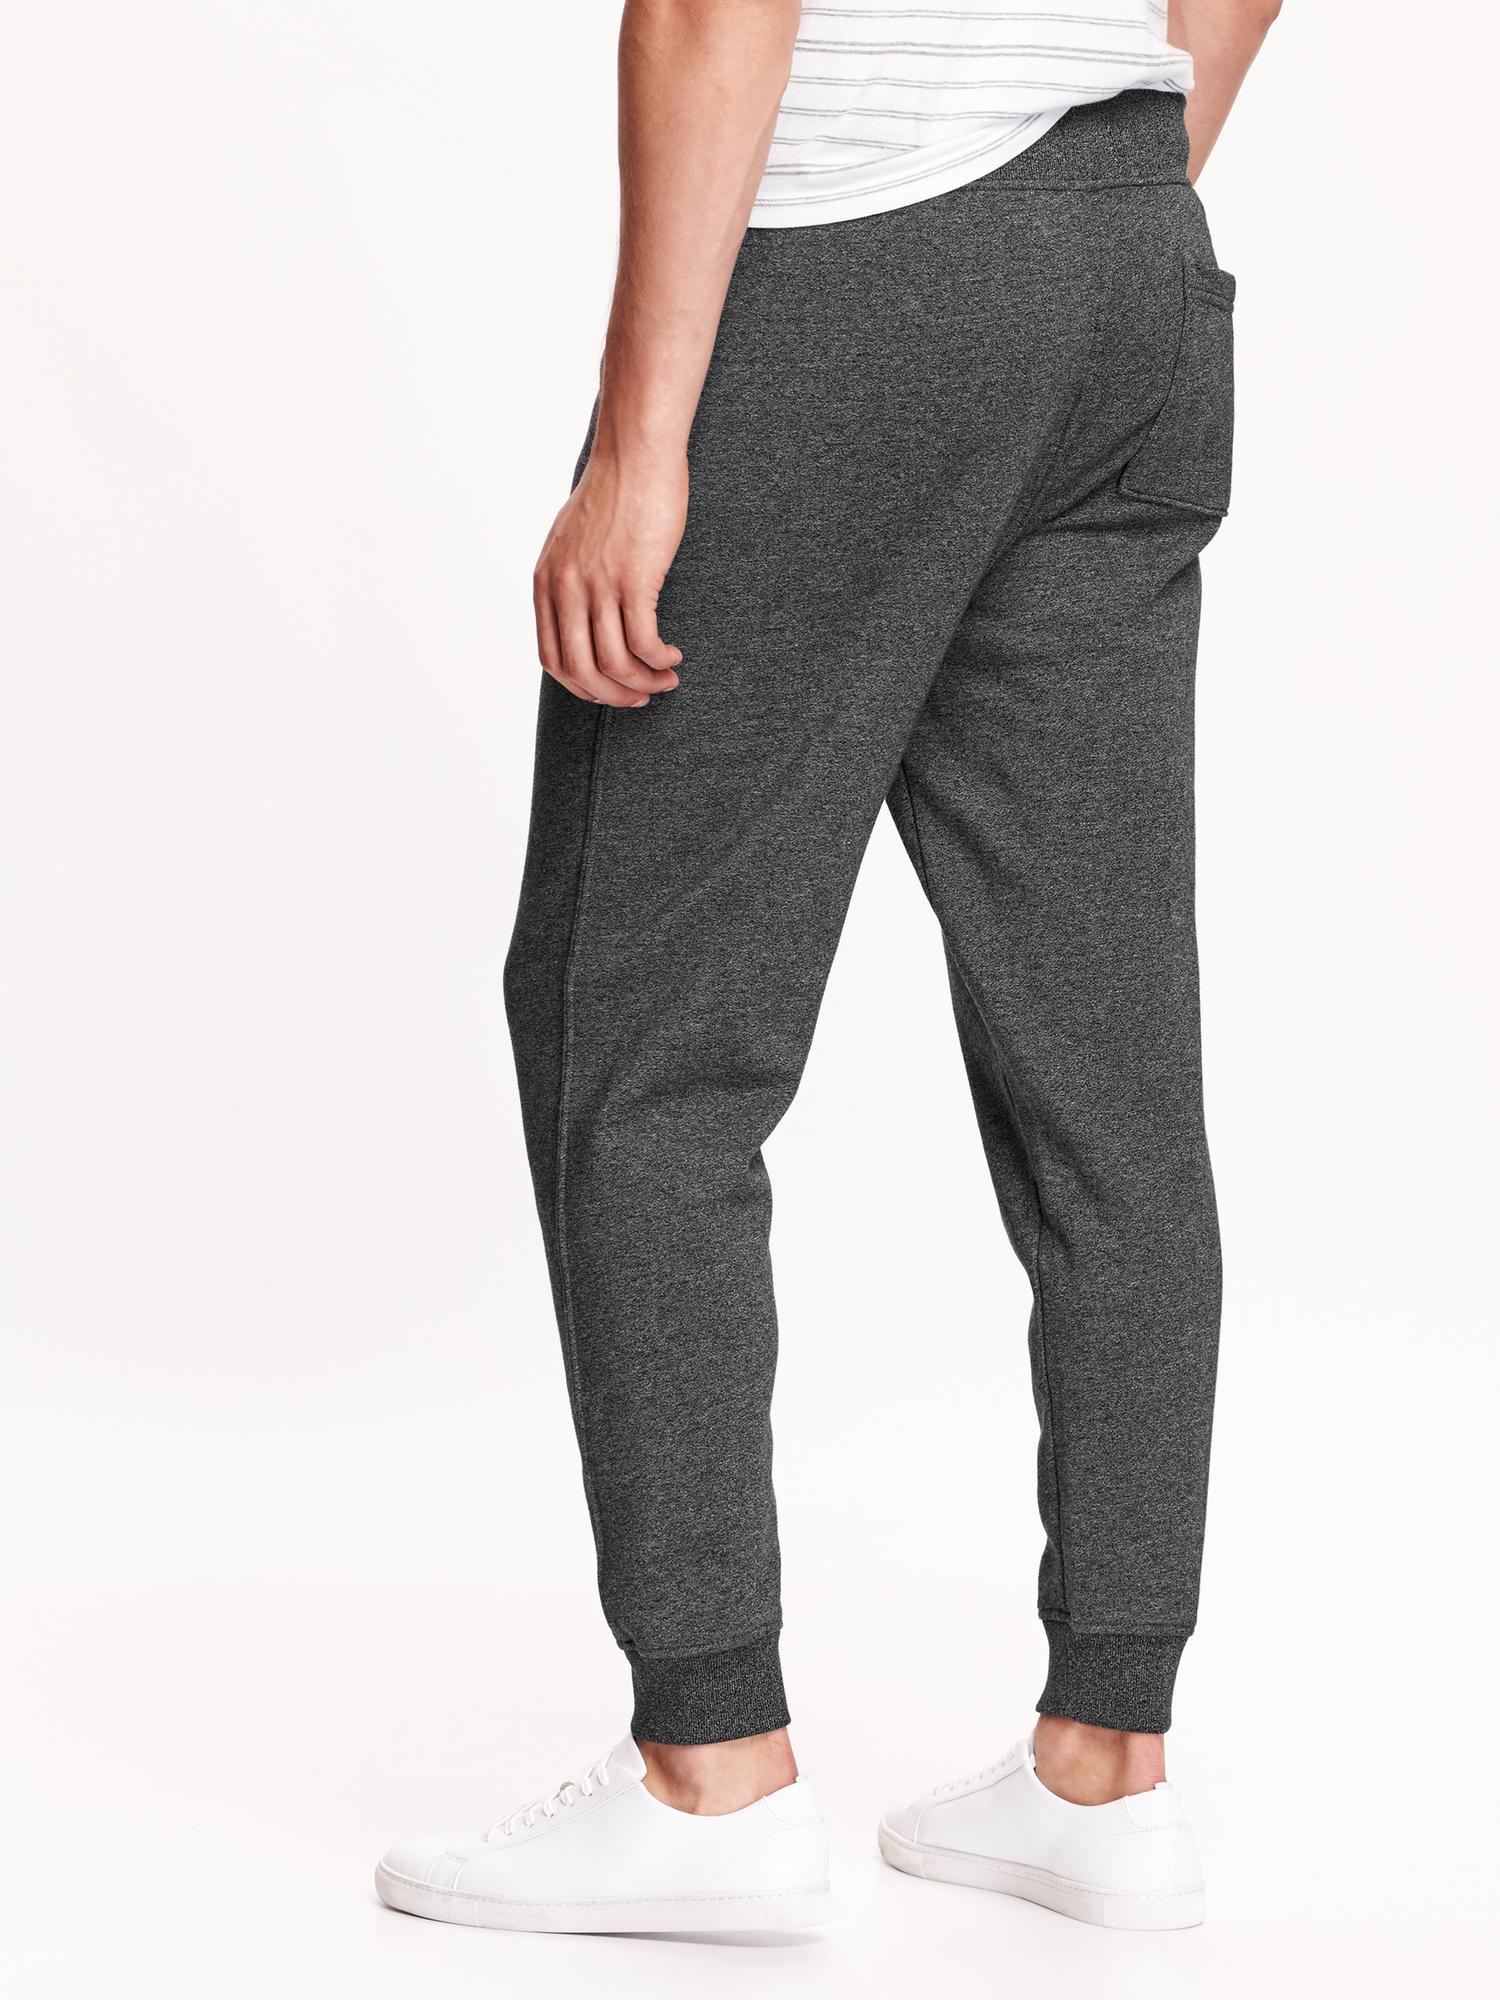 Charcoal Gray slim fit jogger pants Men's Jogger fashion sweat pants M-2XL 